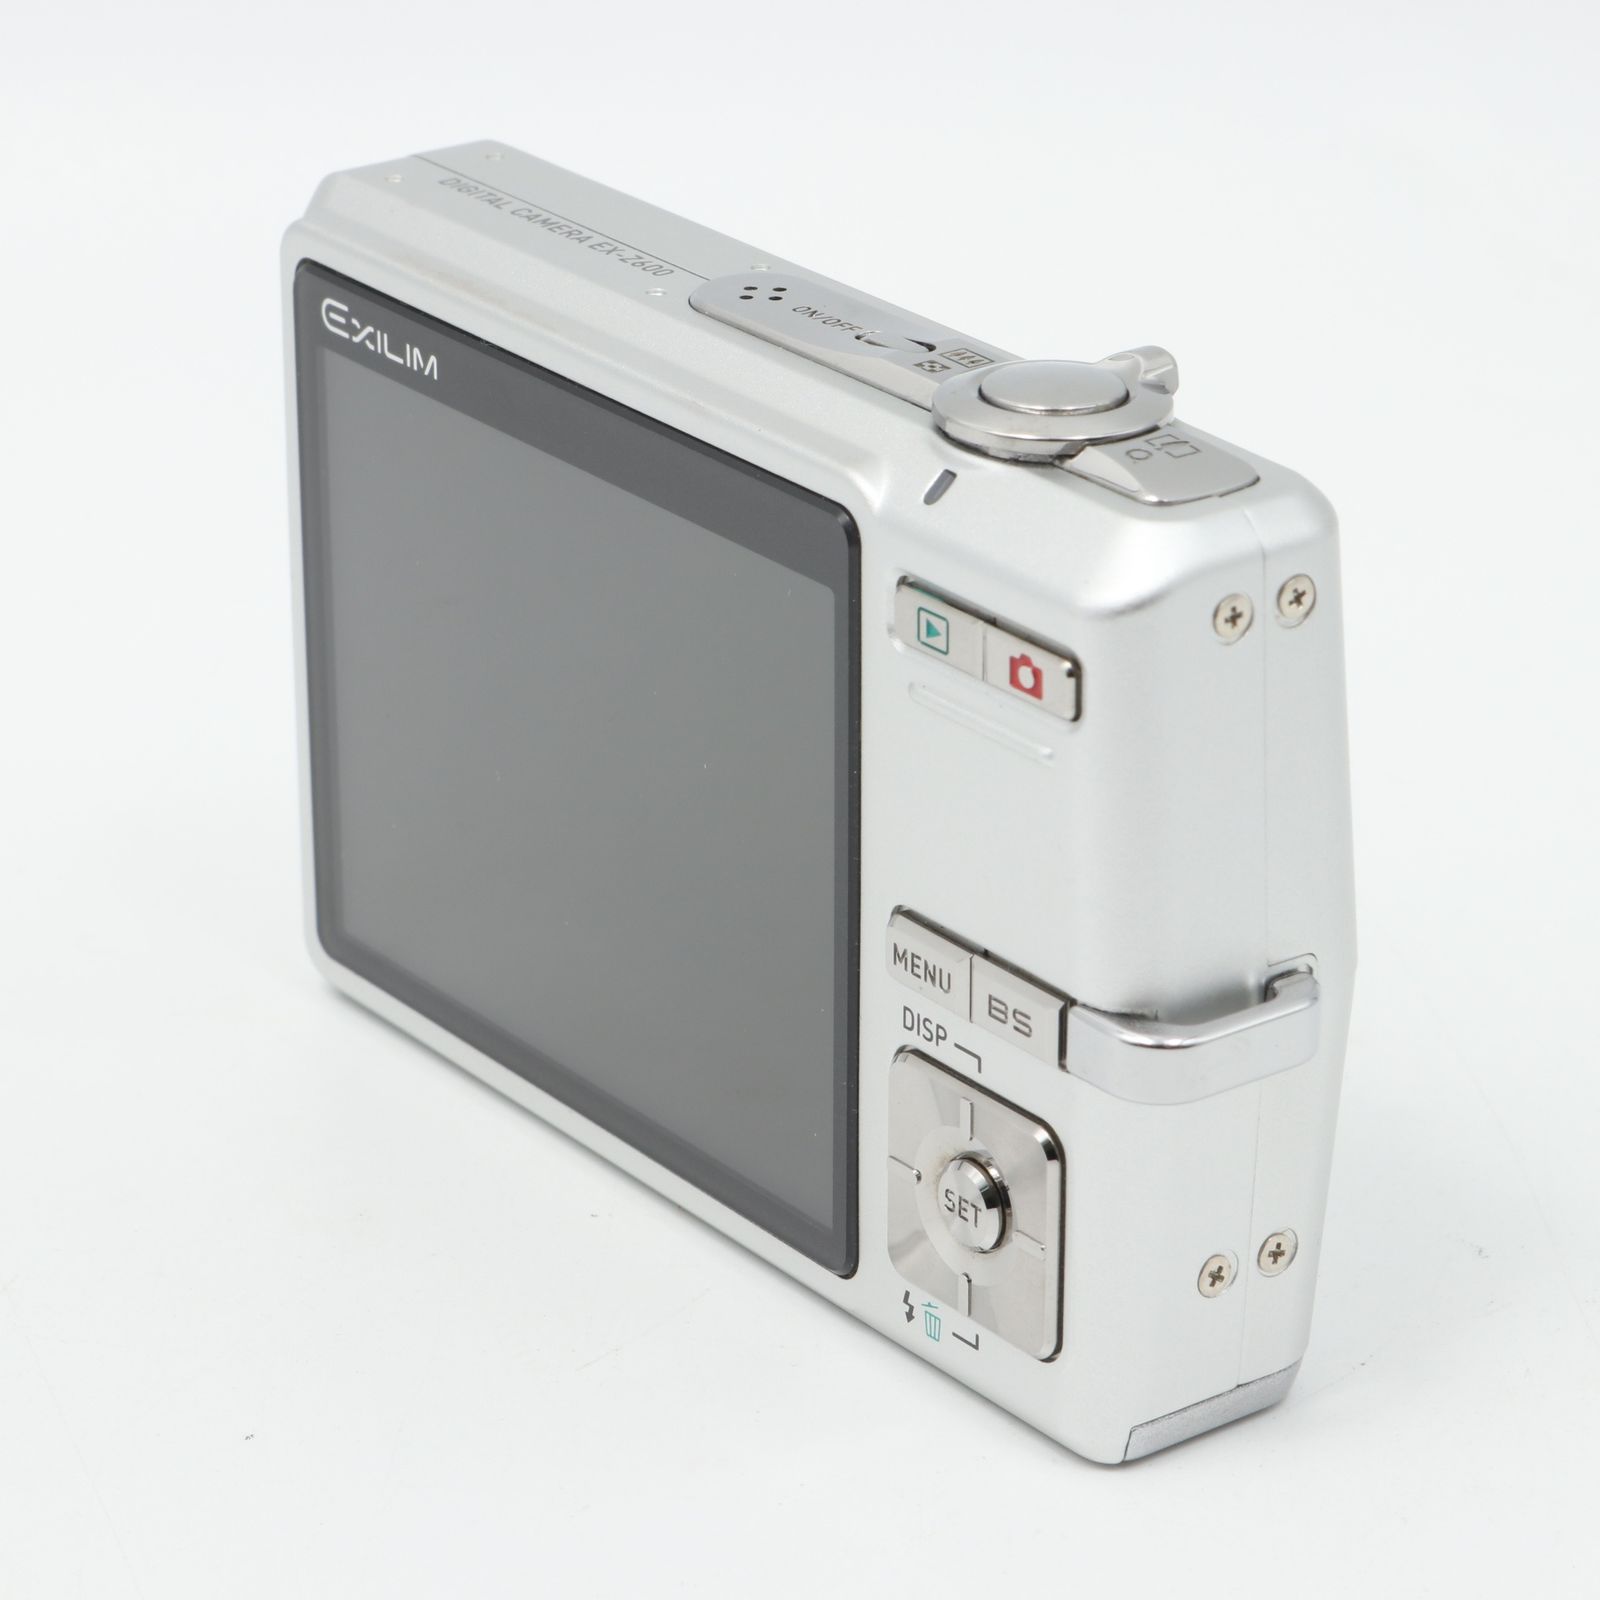 CASIO デジタルカメラ EXILIM (エクシリム) ZOOM シルバー EX-Z600 